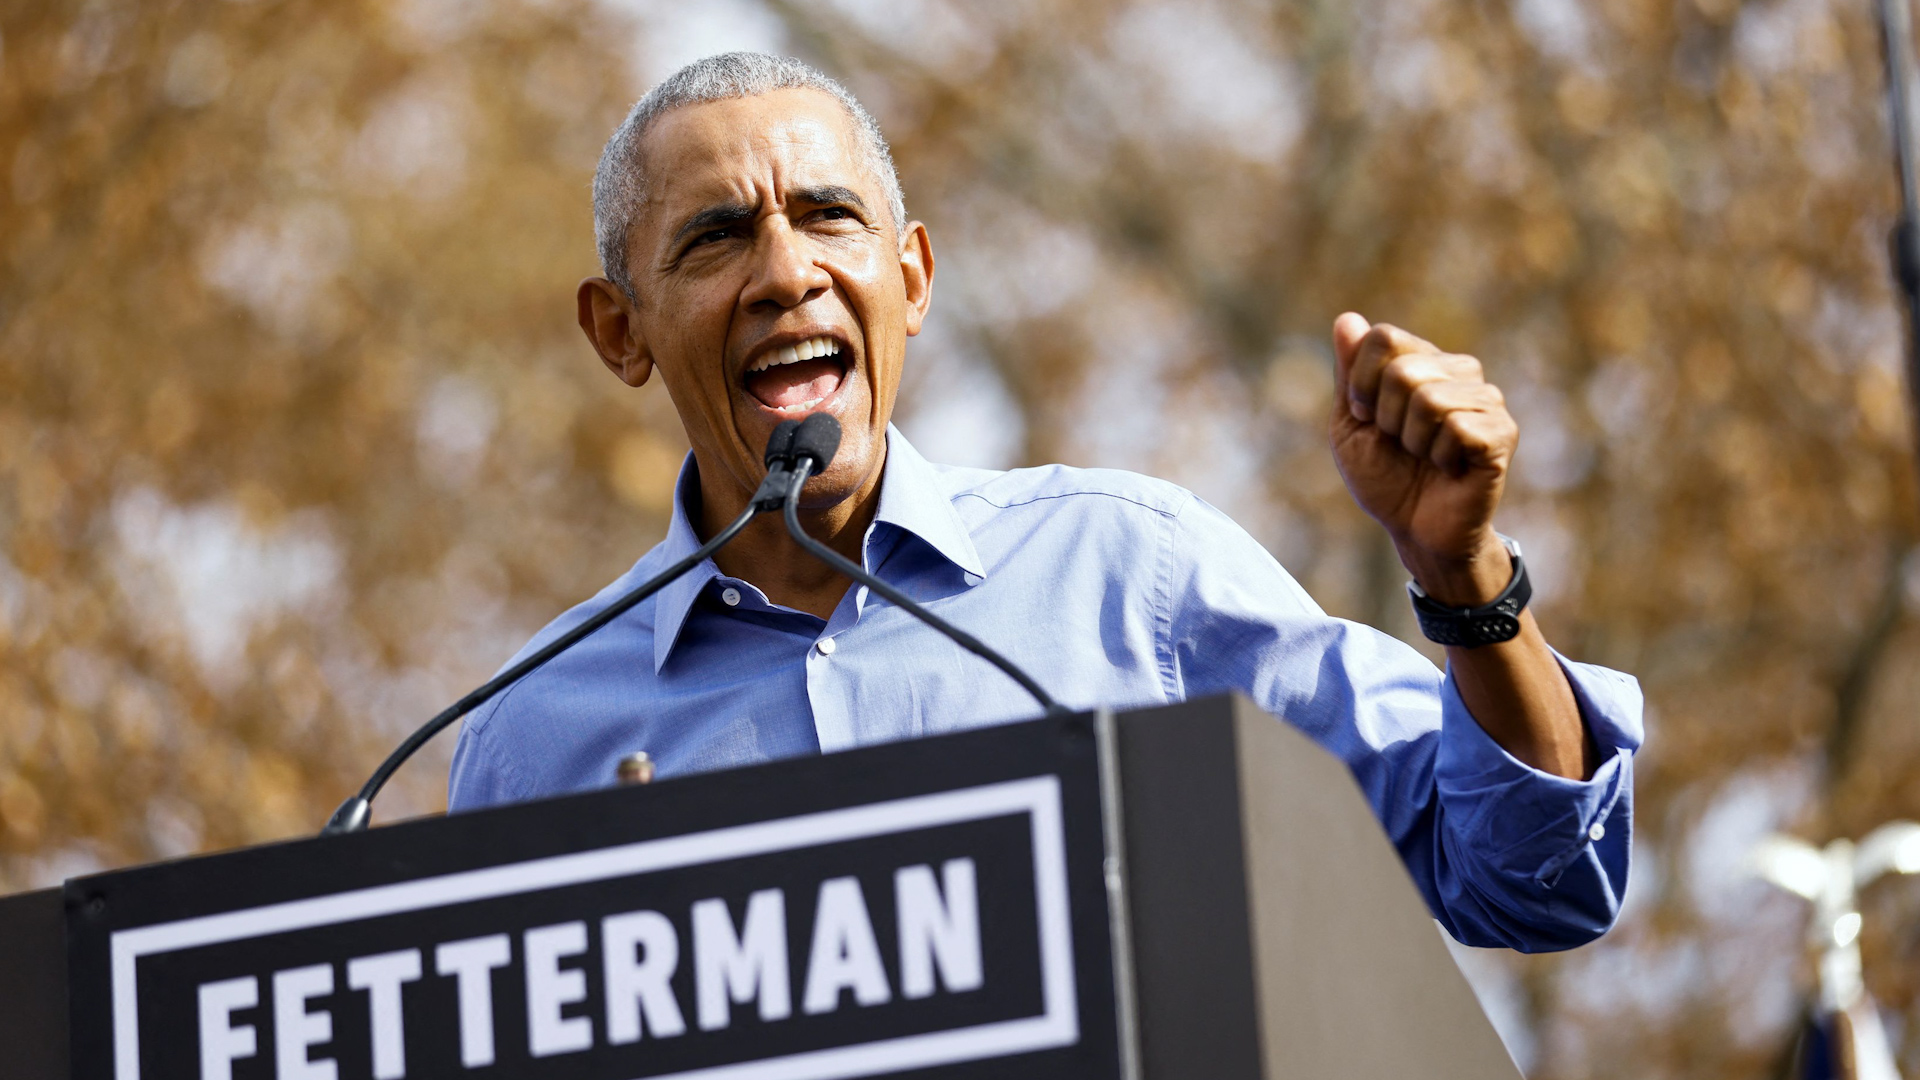 deniers　Post　The　Fetterman　election　Pennsylvania,　at　in　aim　takes　for　stumps　Obama　Washington